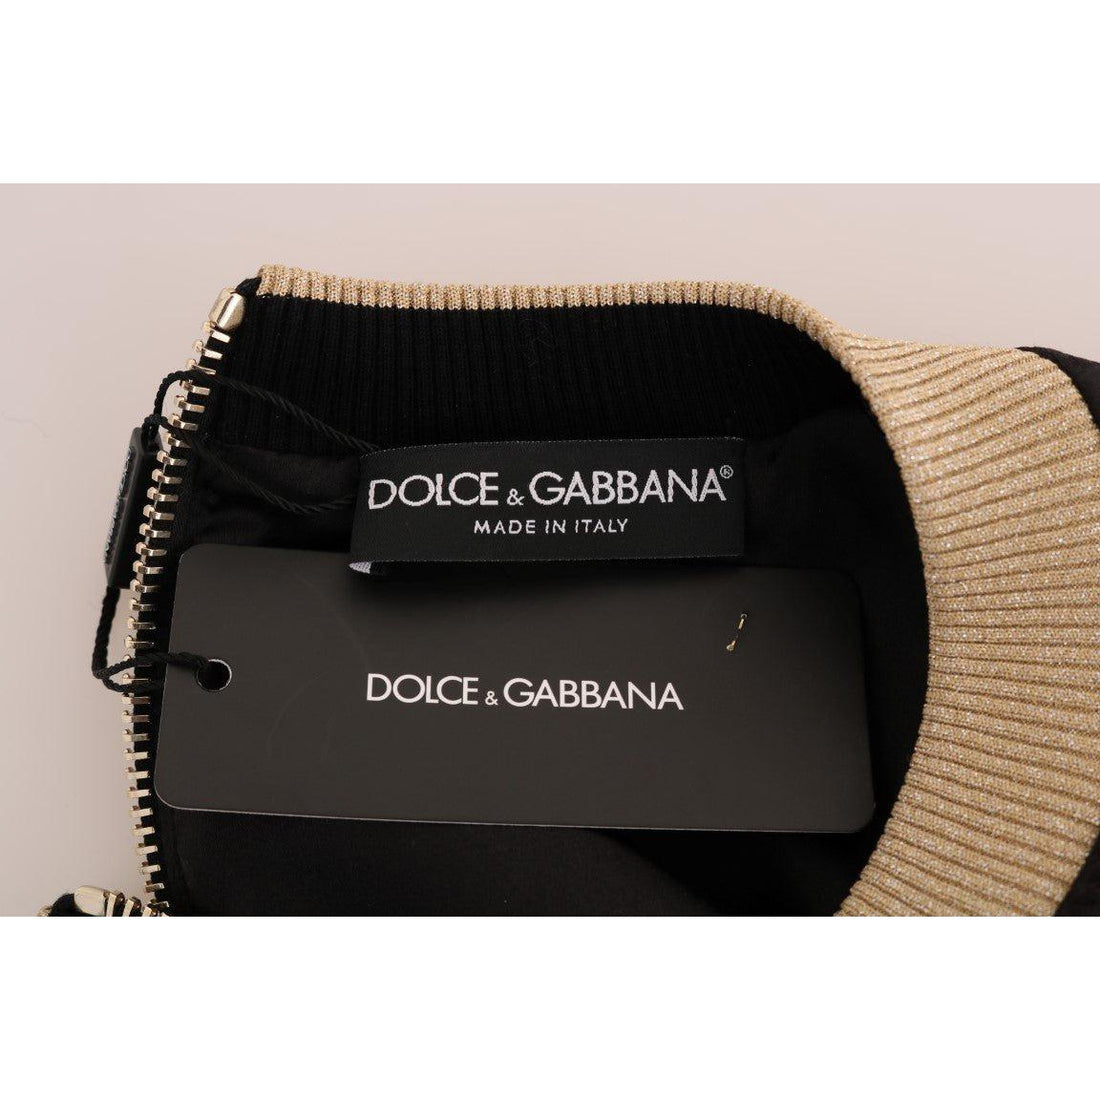 Dolce & Gabbana Black Fairy Tale Brocade Zipper Sweater - Paris Deluxe